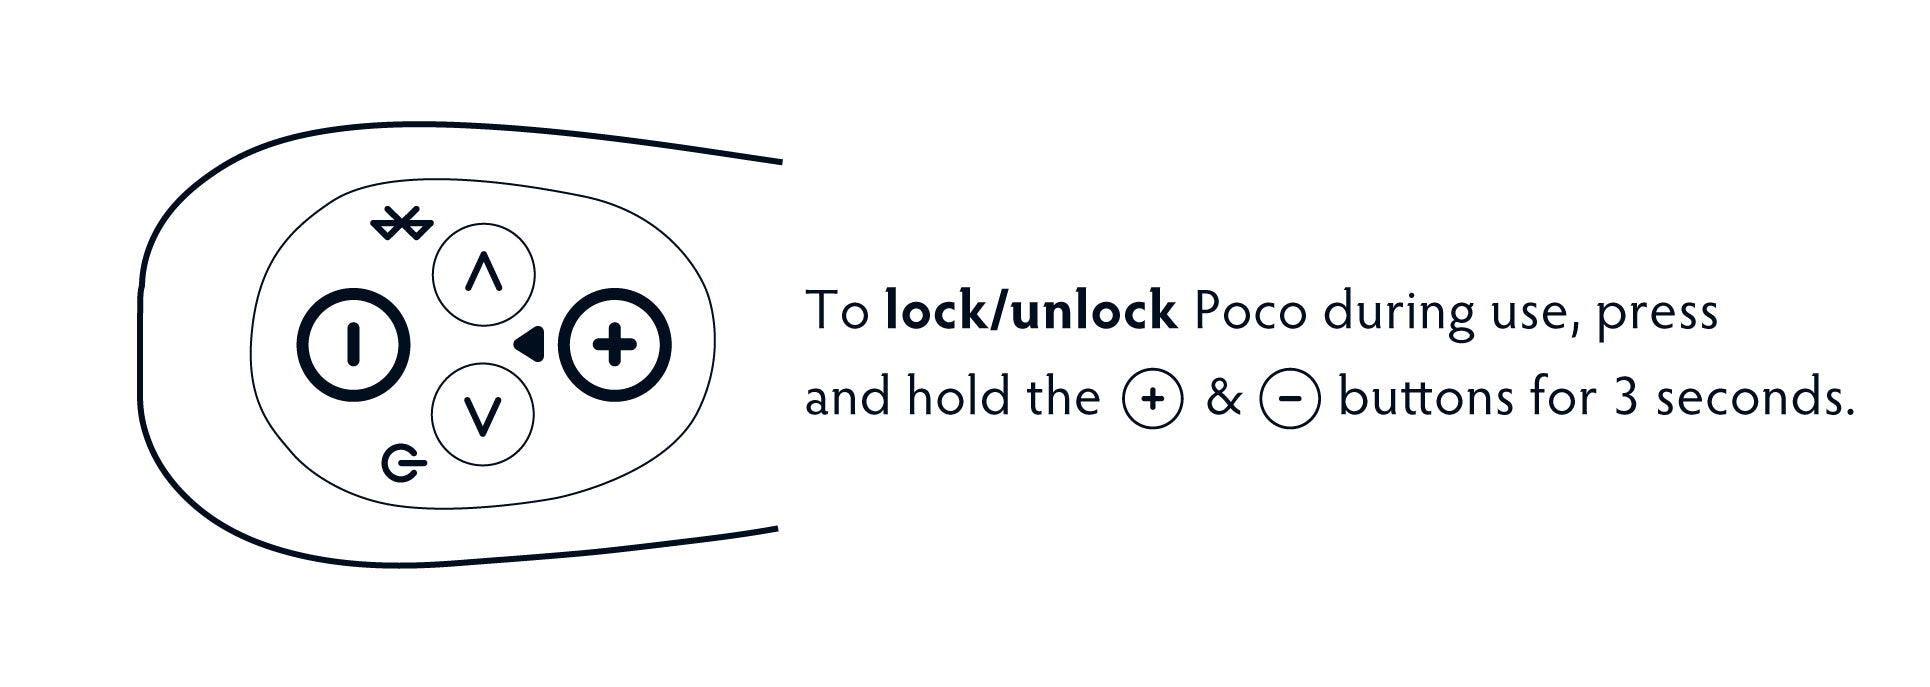 How to lock and unlock Poco